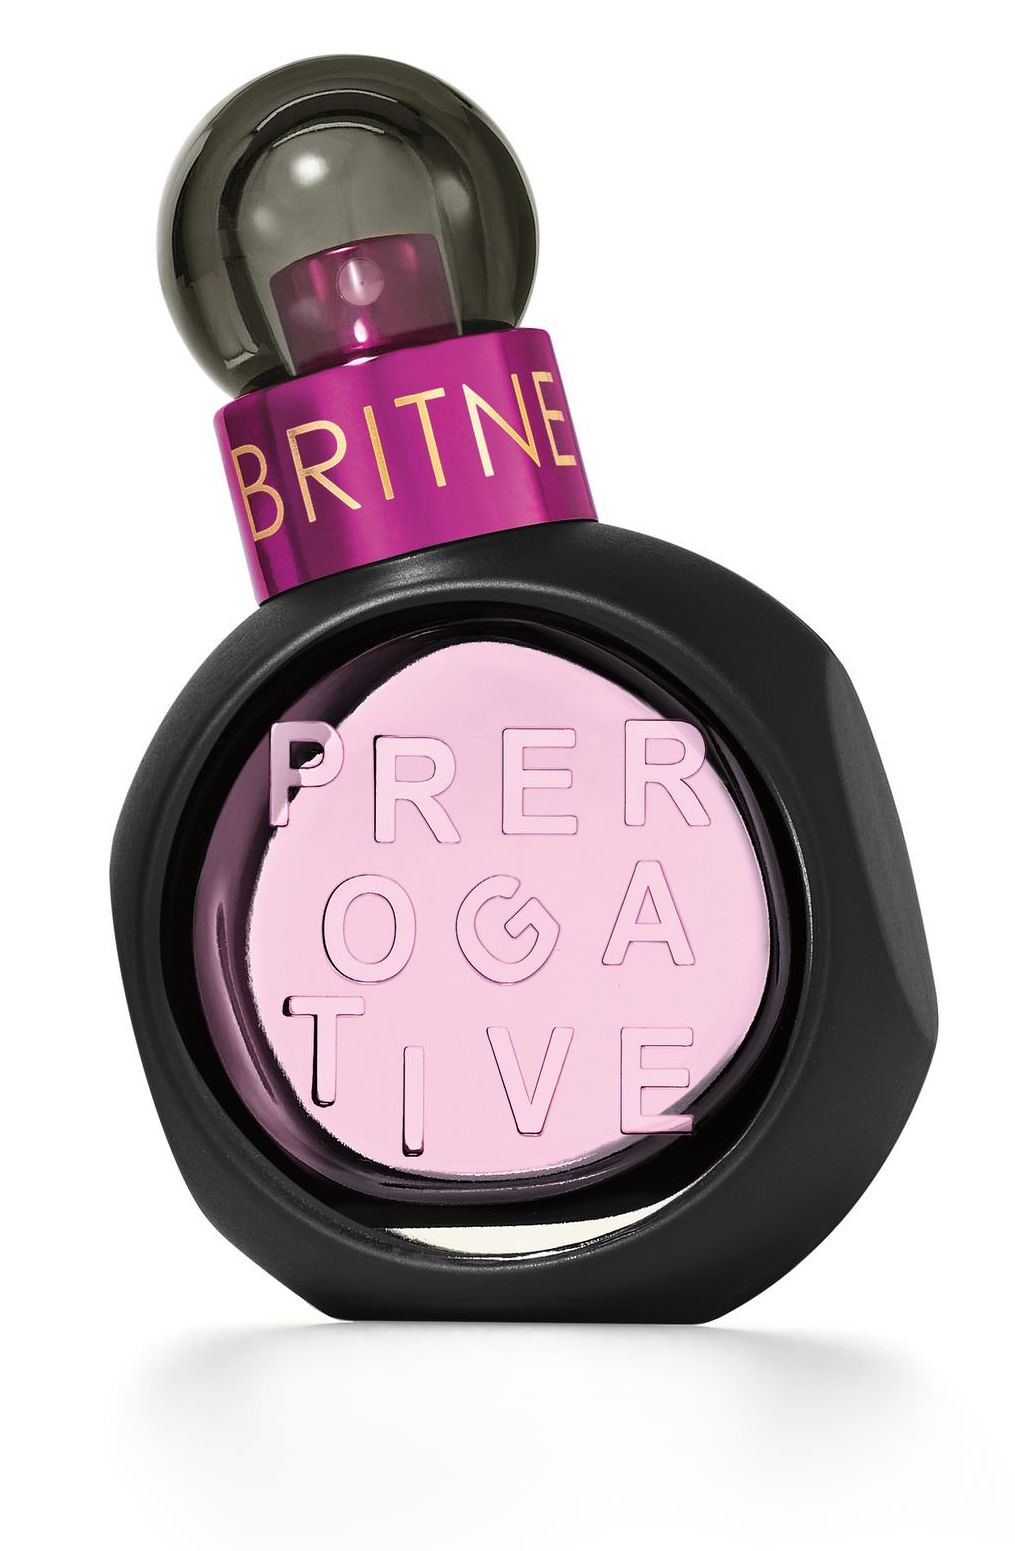 PREROGATIVE 1st unisex fragrance from Britney Spears